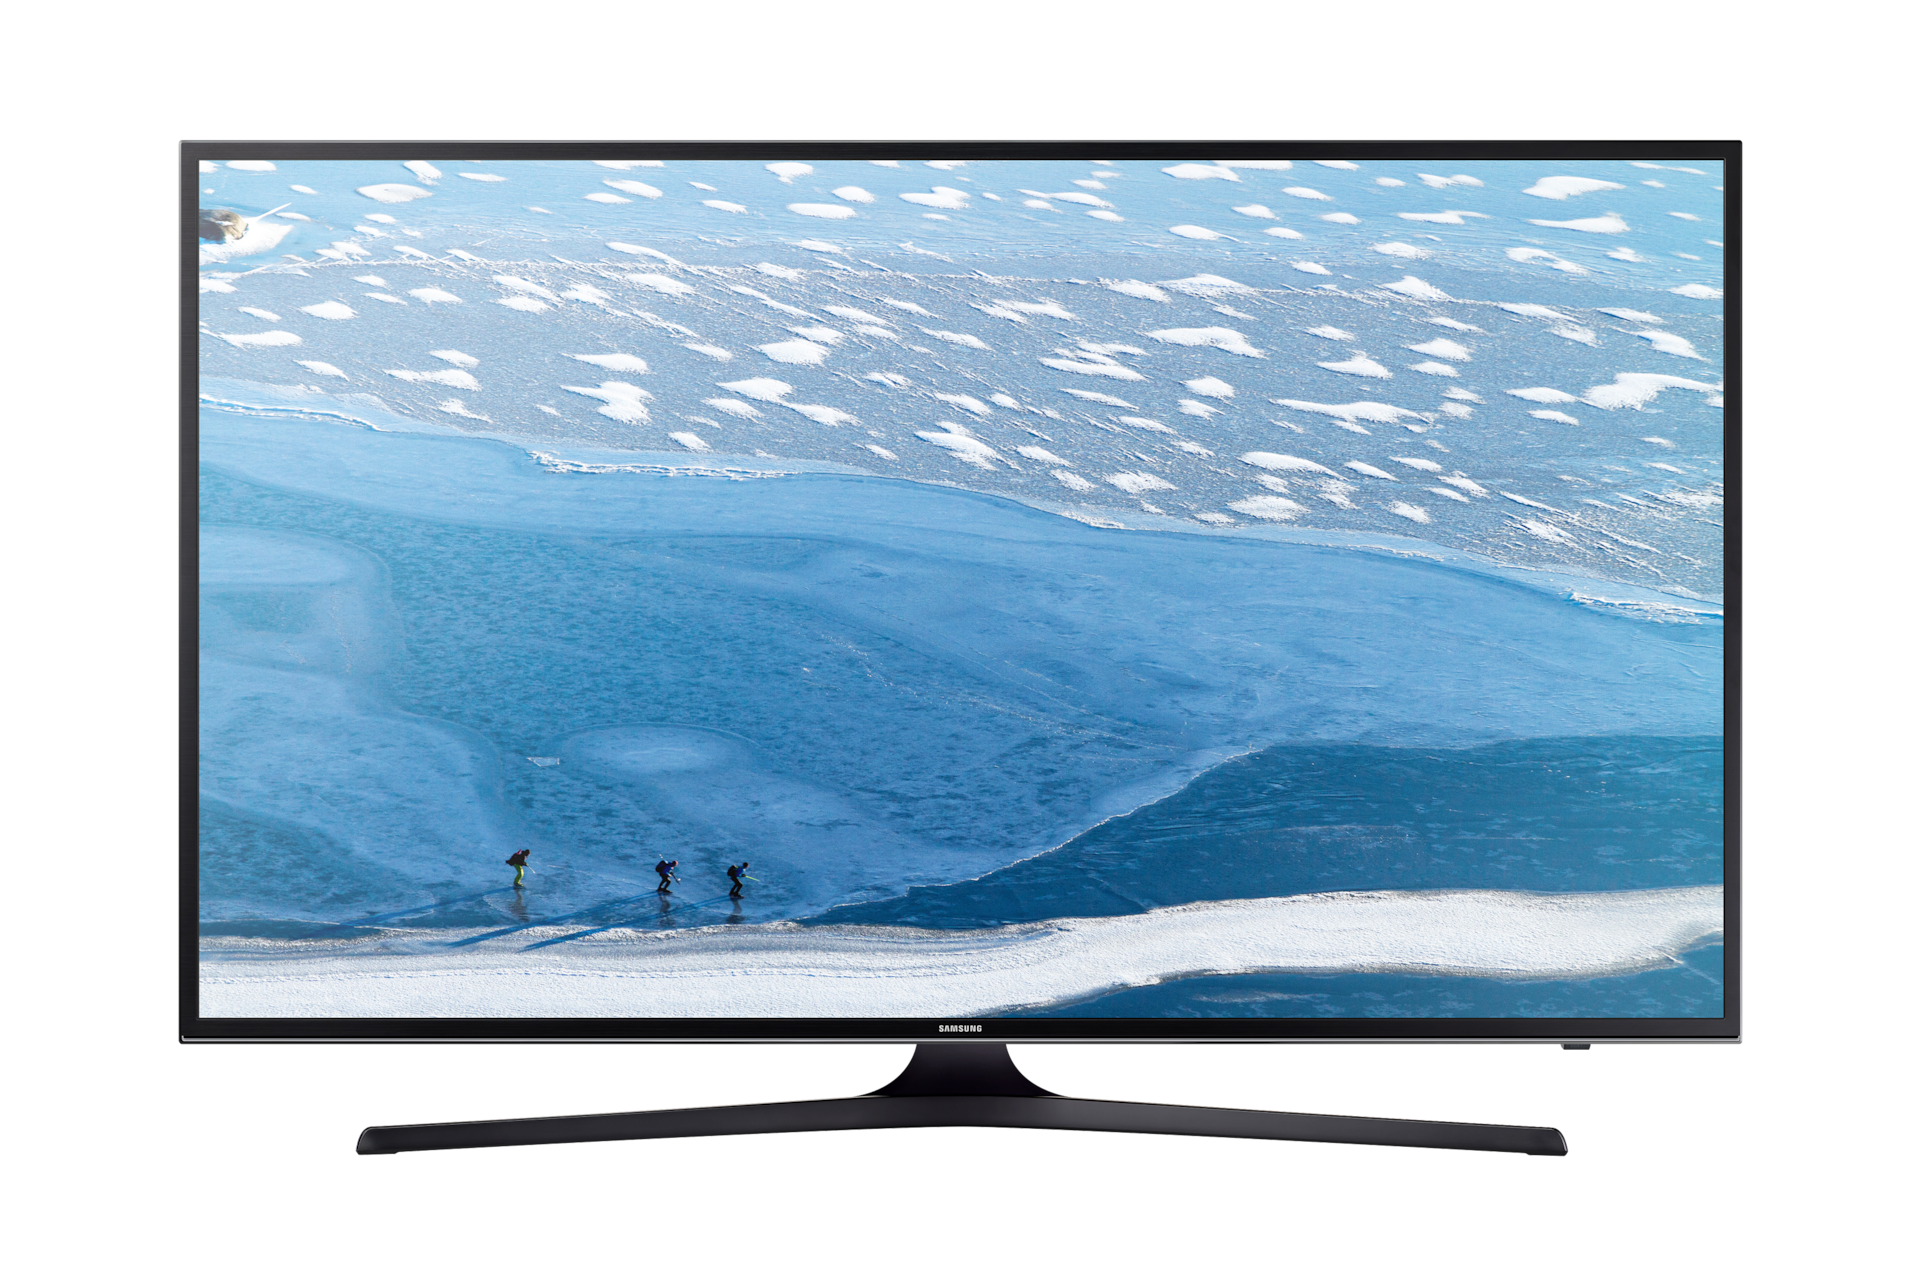 Samsung Ua55ku6000 55 Smart Tv 4k Uhd Flat Tv Price In Philippines